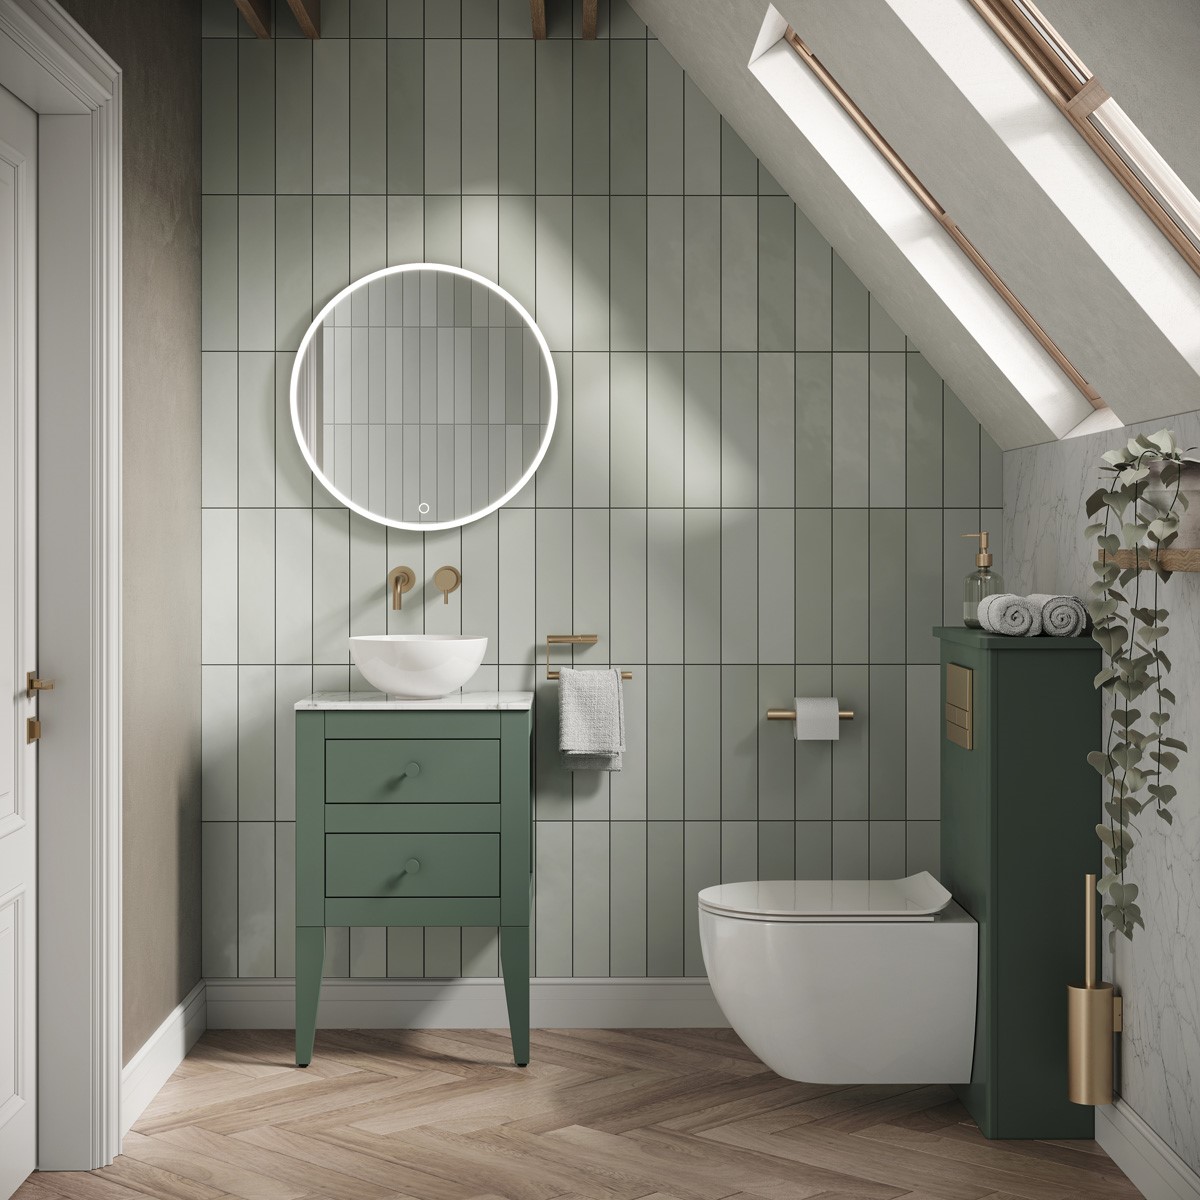 Small bathroom design | Welcome elegance to your stylish bathroom idea with mid century modern.